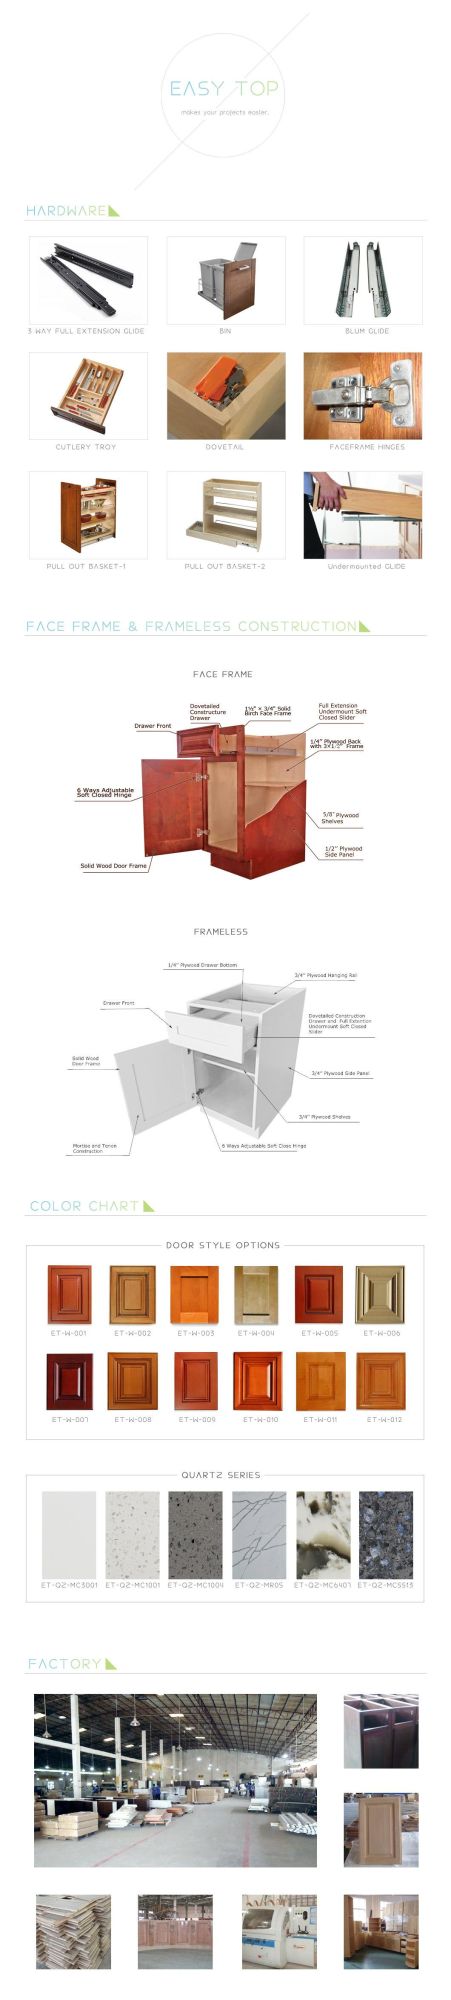 Solid Wood Grey Shaker Cupboard Rta Kitchen Cabinet with Range Hood